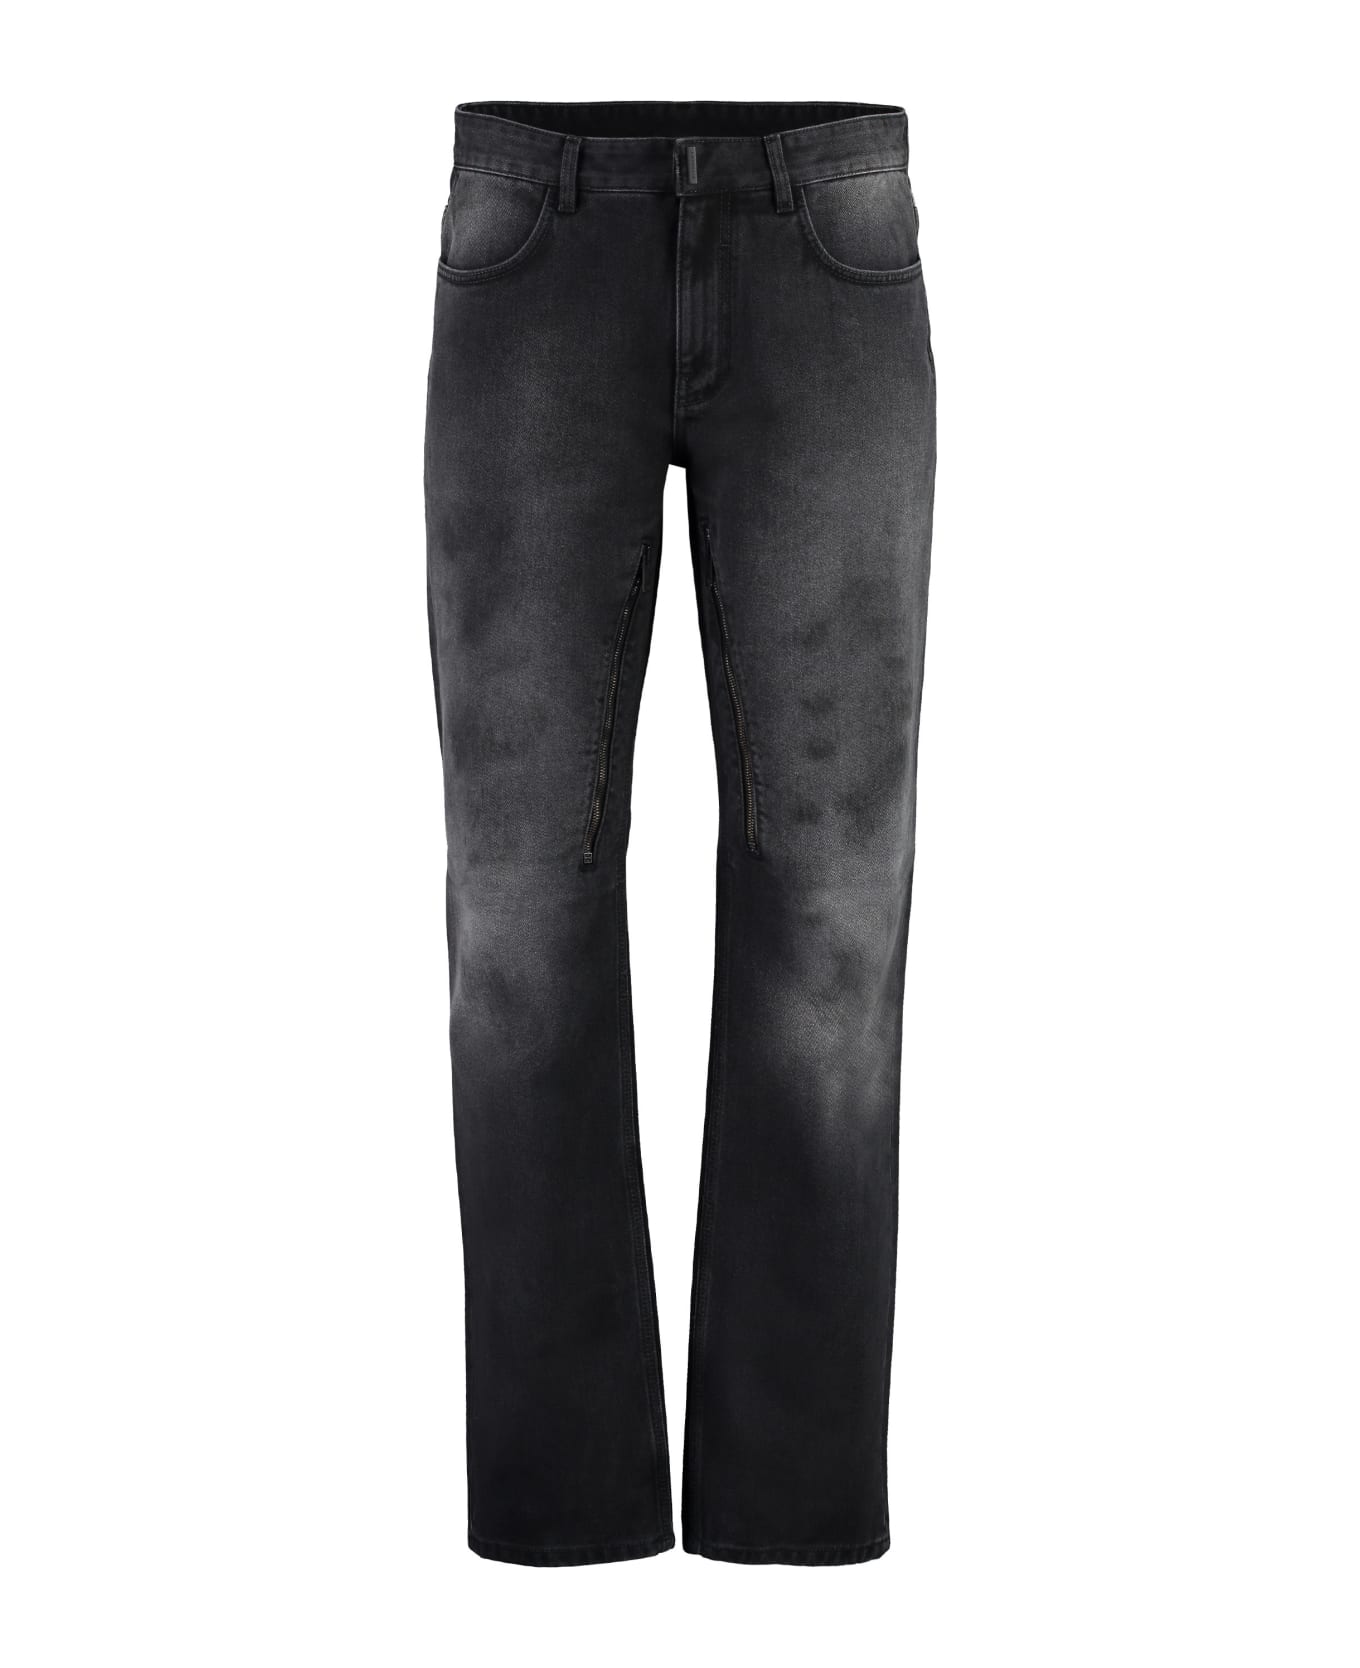 Givenchy Straight Leg Jeans - grey デニム